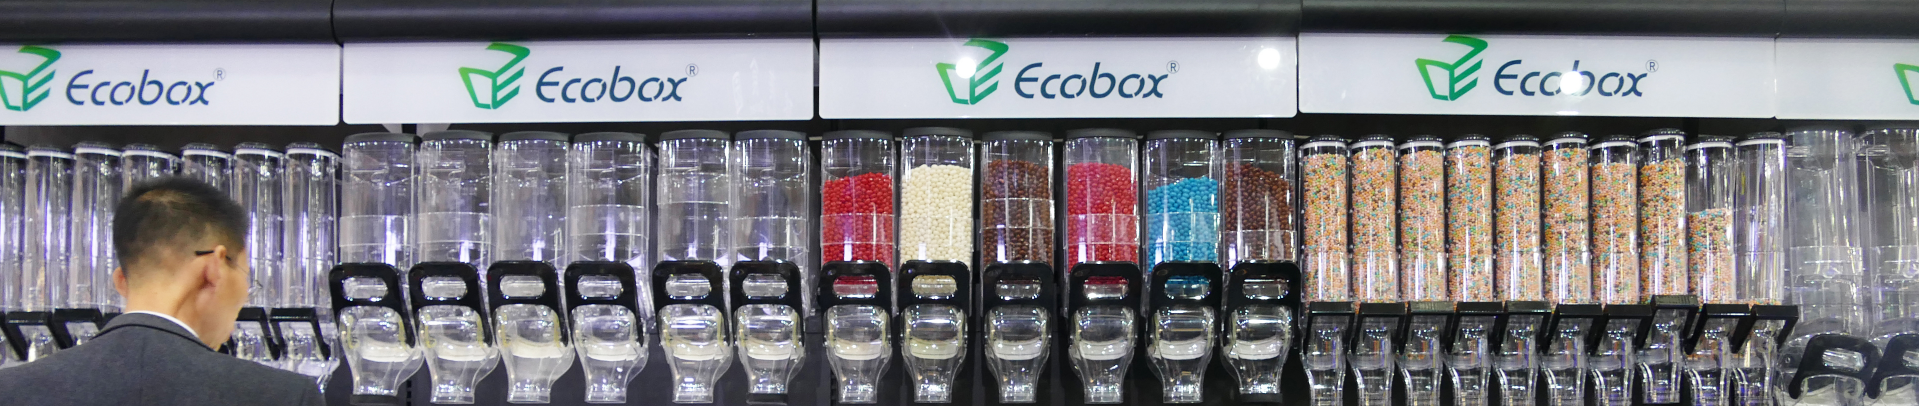 Ecobox gravity dispenser